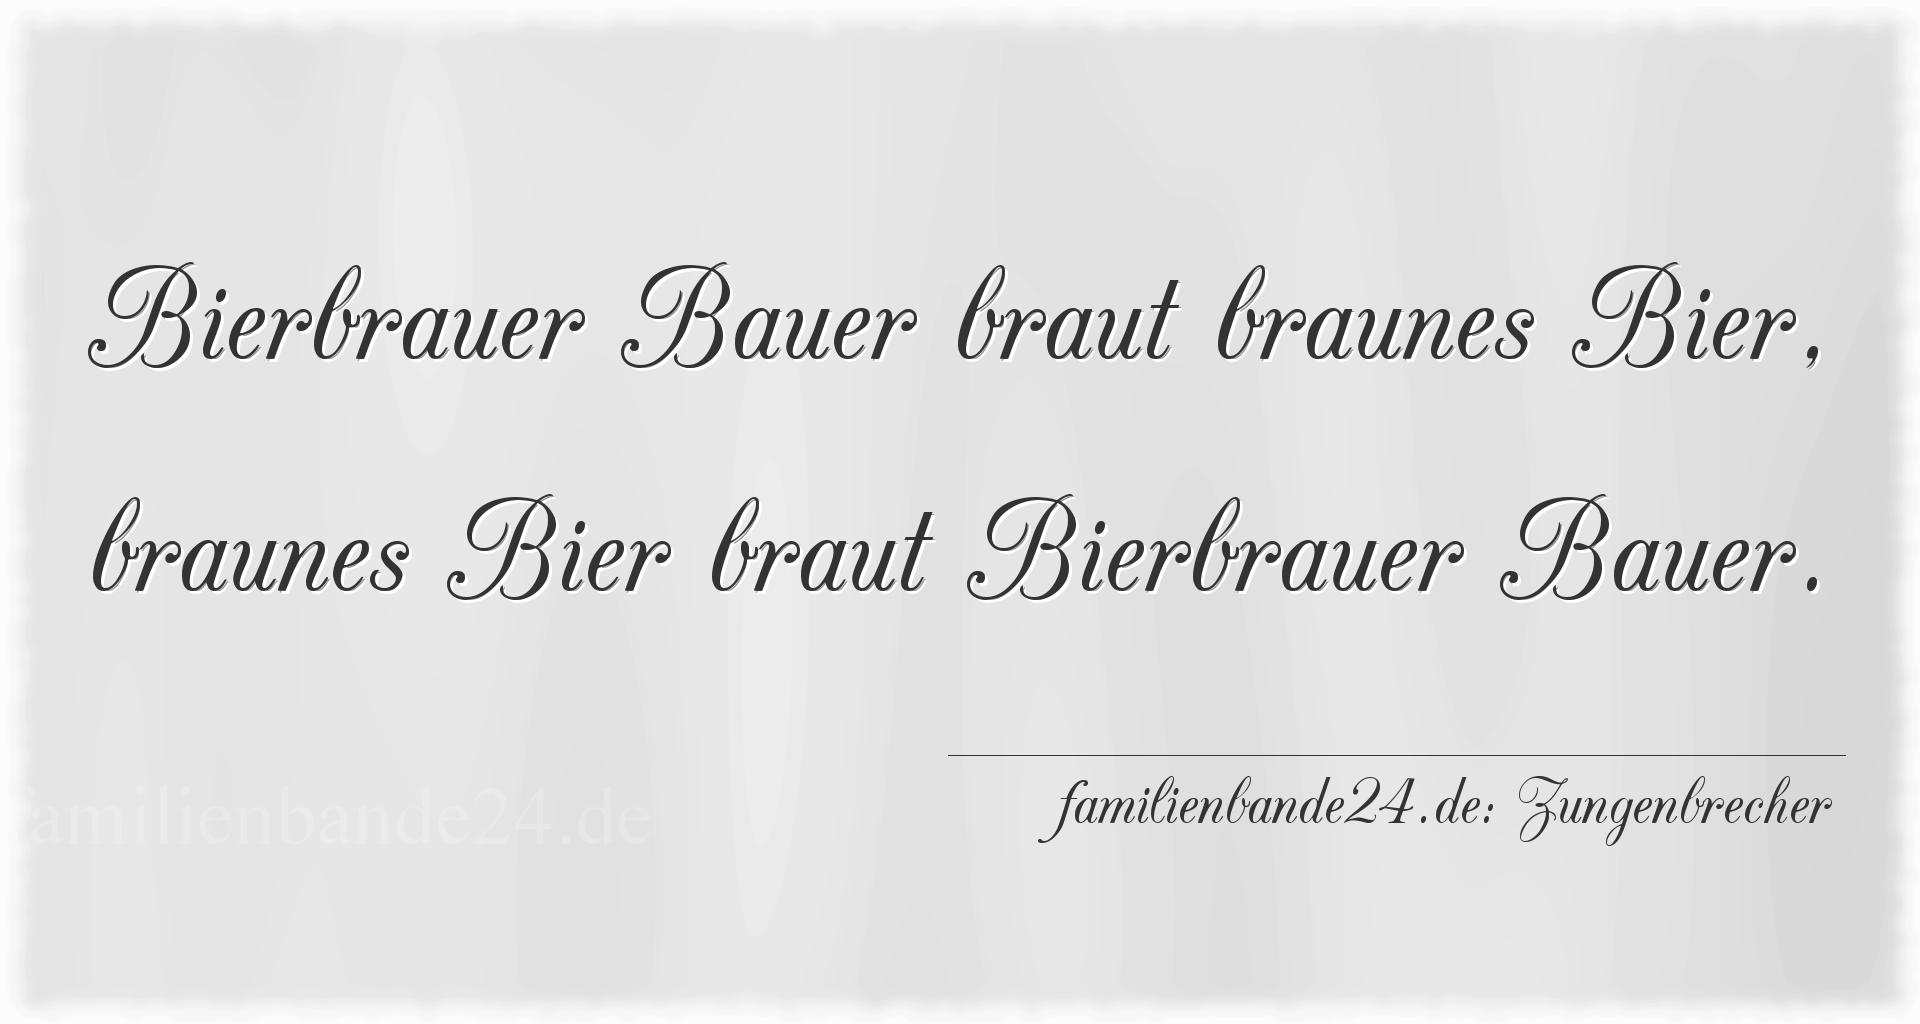 Zungenbrecher Nummer 690: Bierbrauer Bauer braut braunes Bier, braunes Bier braut Bi [...]